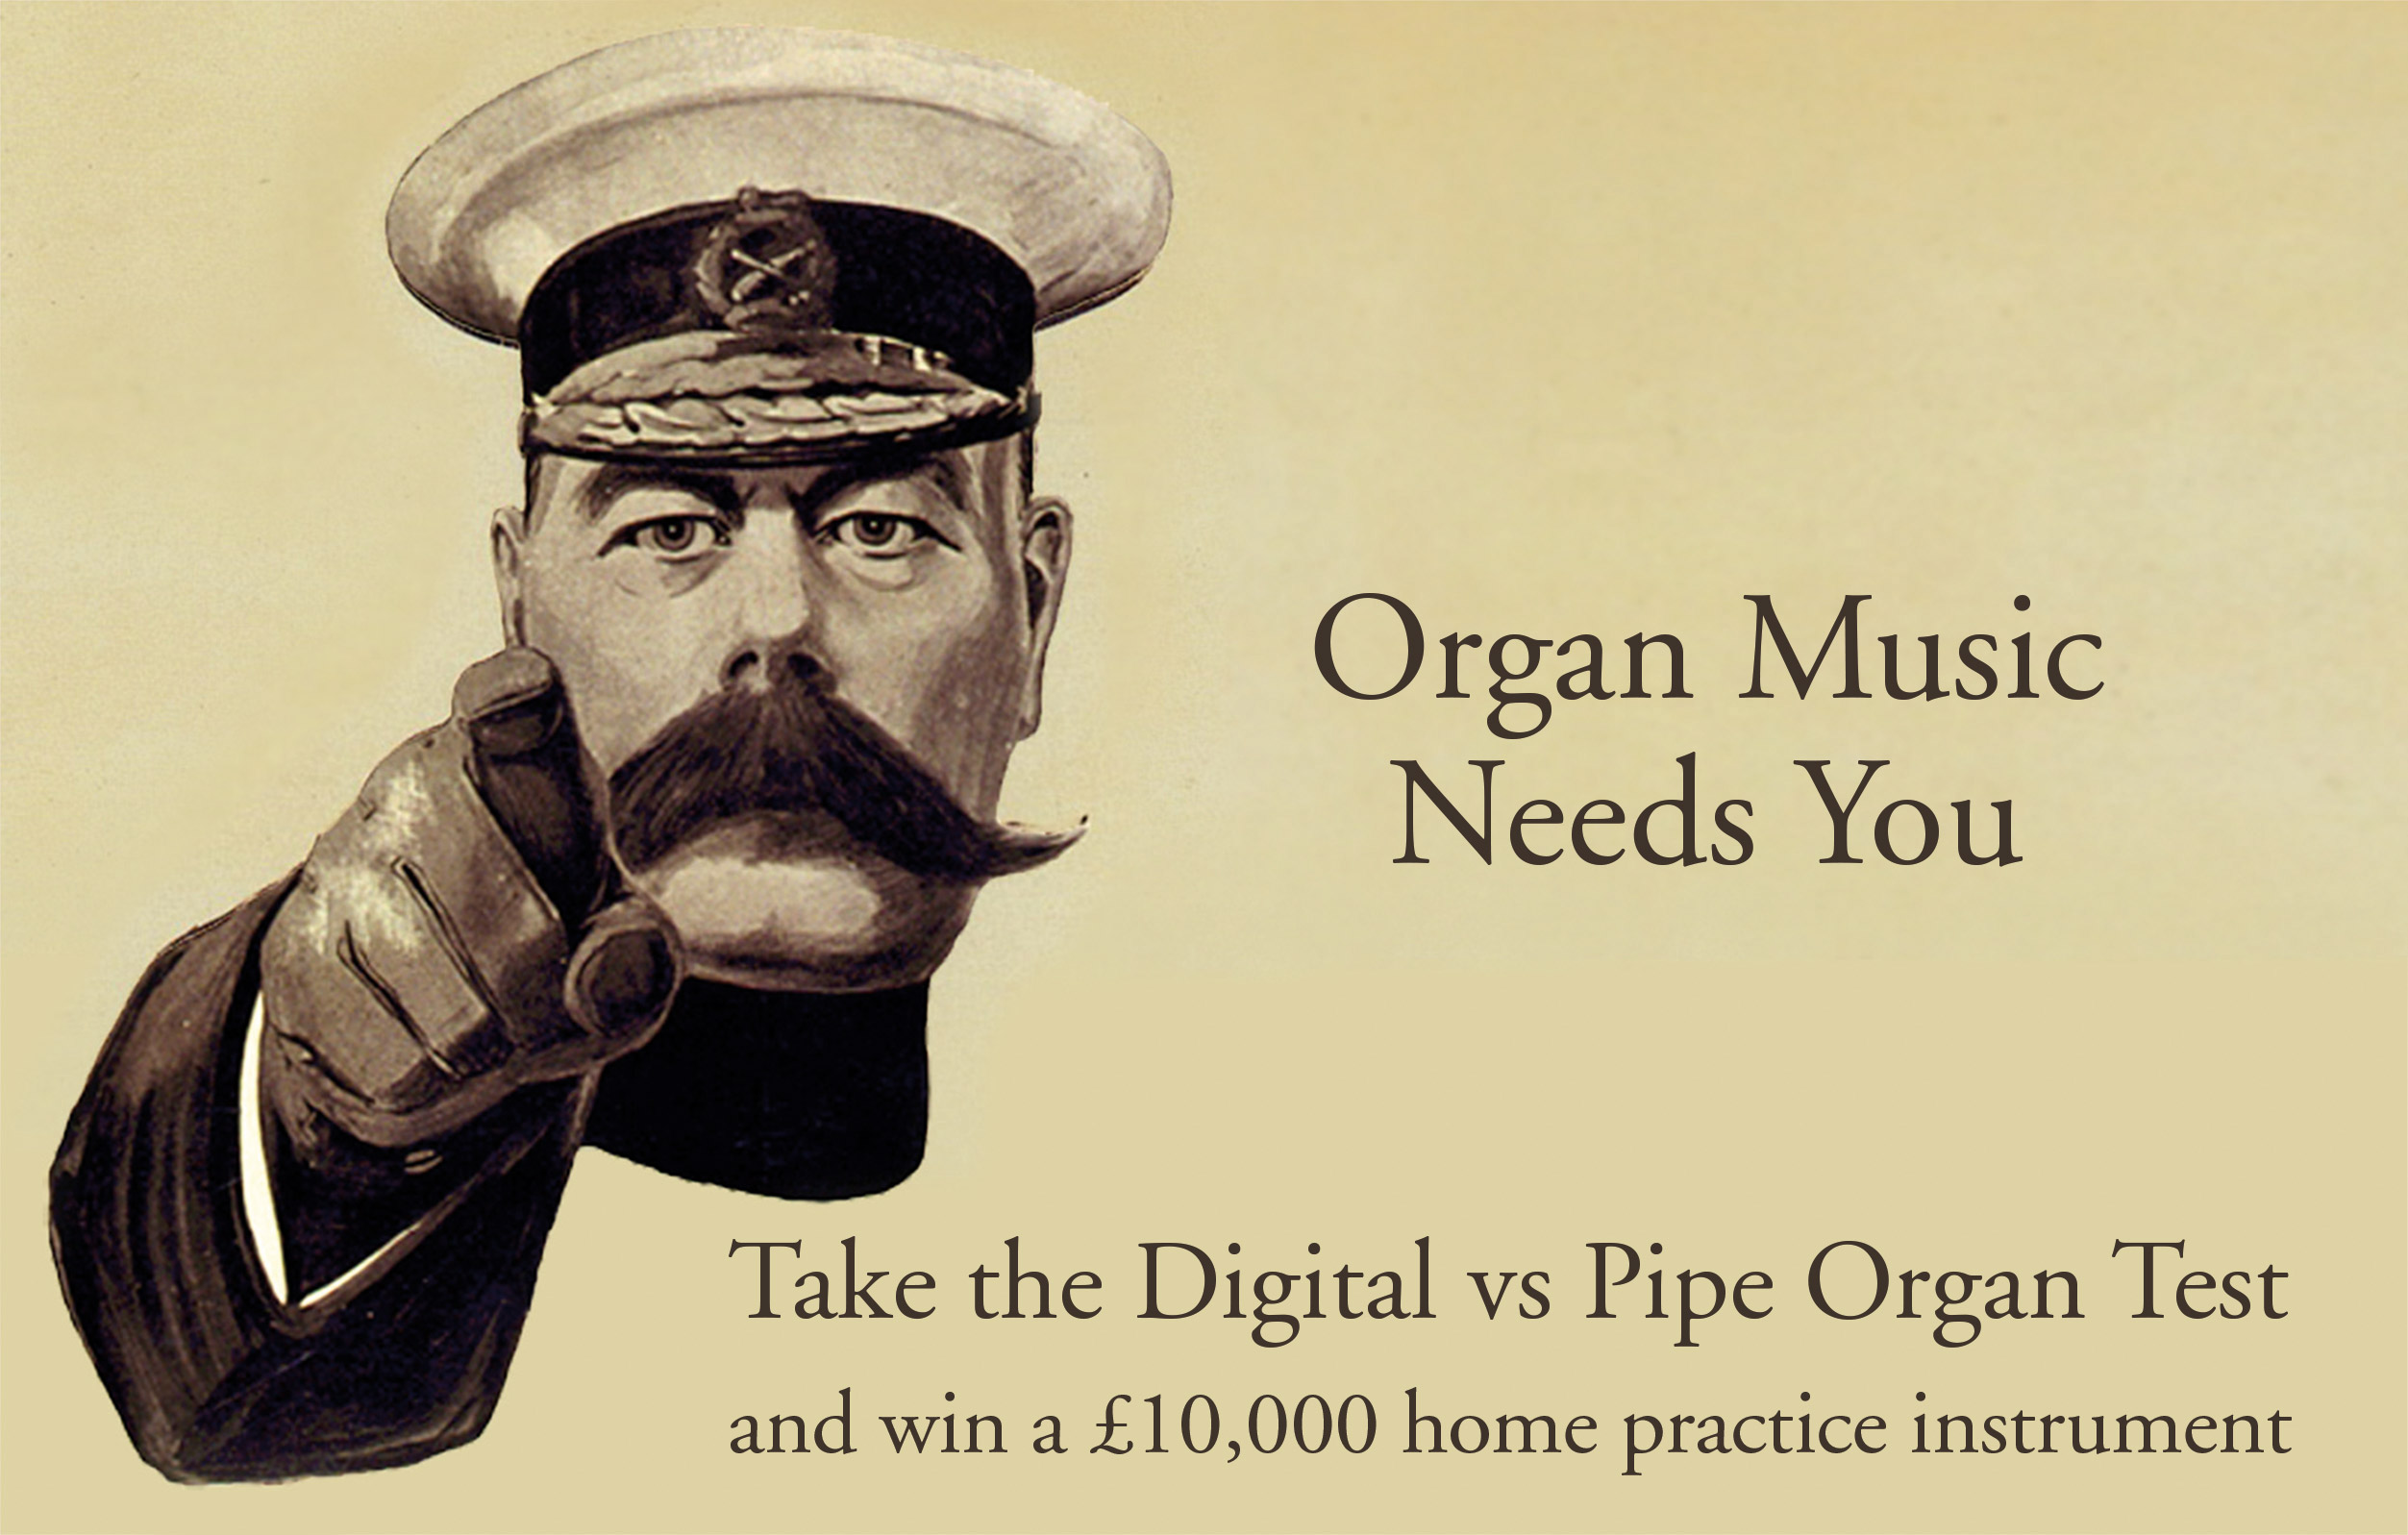 take the aural test, pipe organ v digital organ